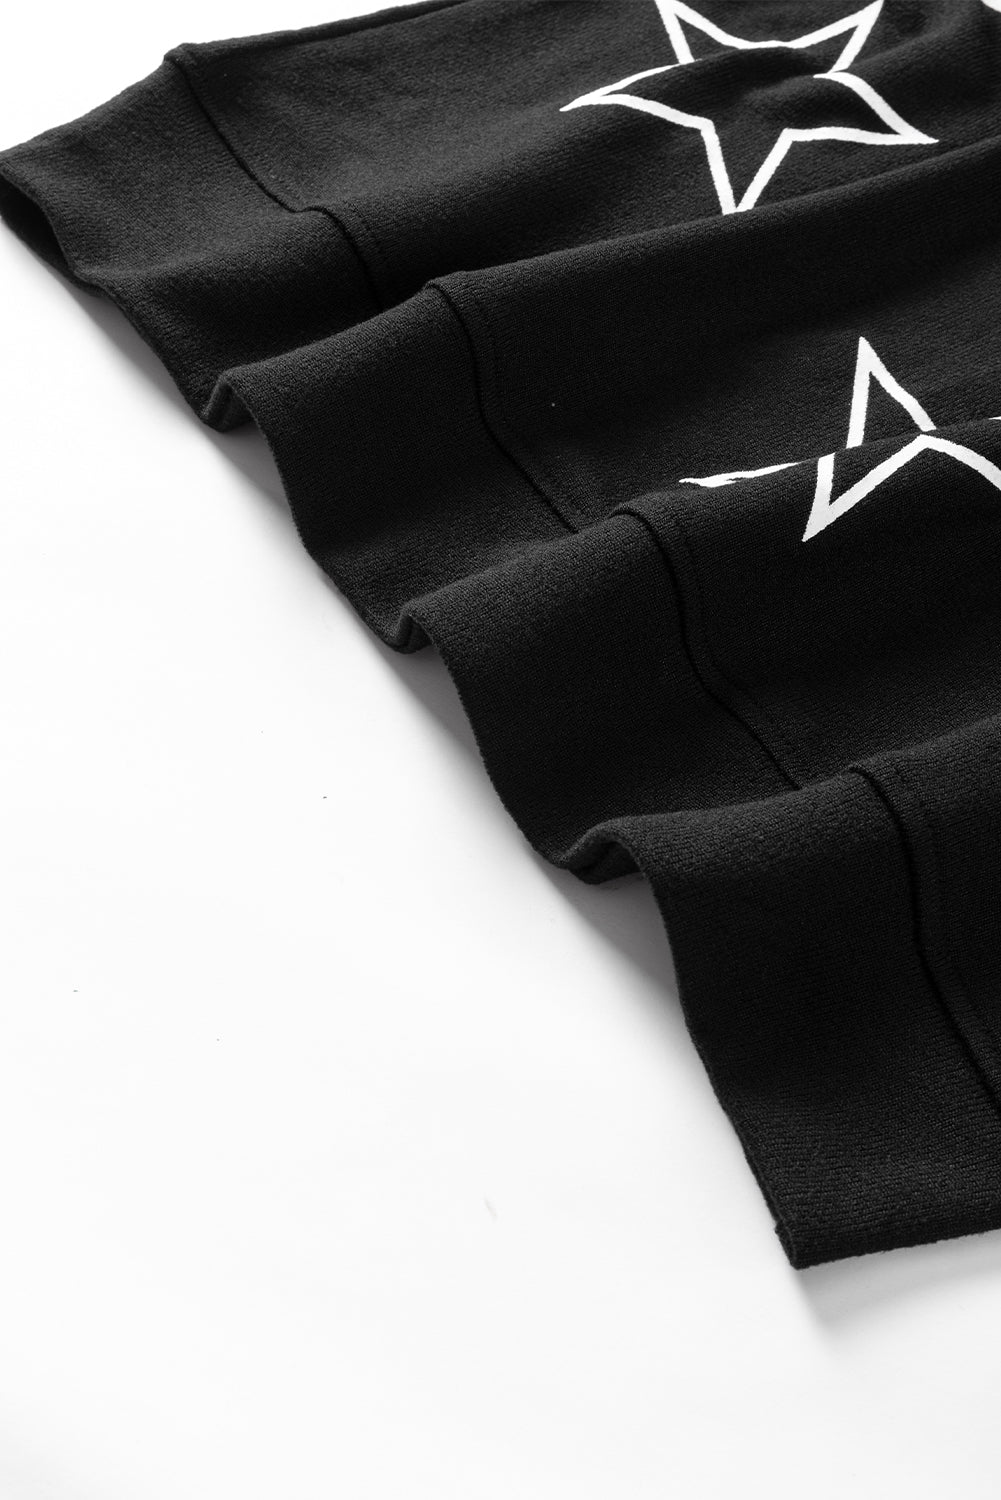 Black Stars Print Long Sleeve Drawstring High Waist Lounge Set